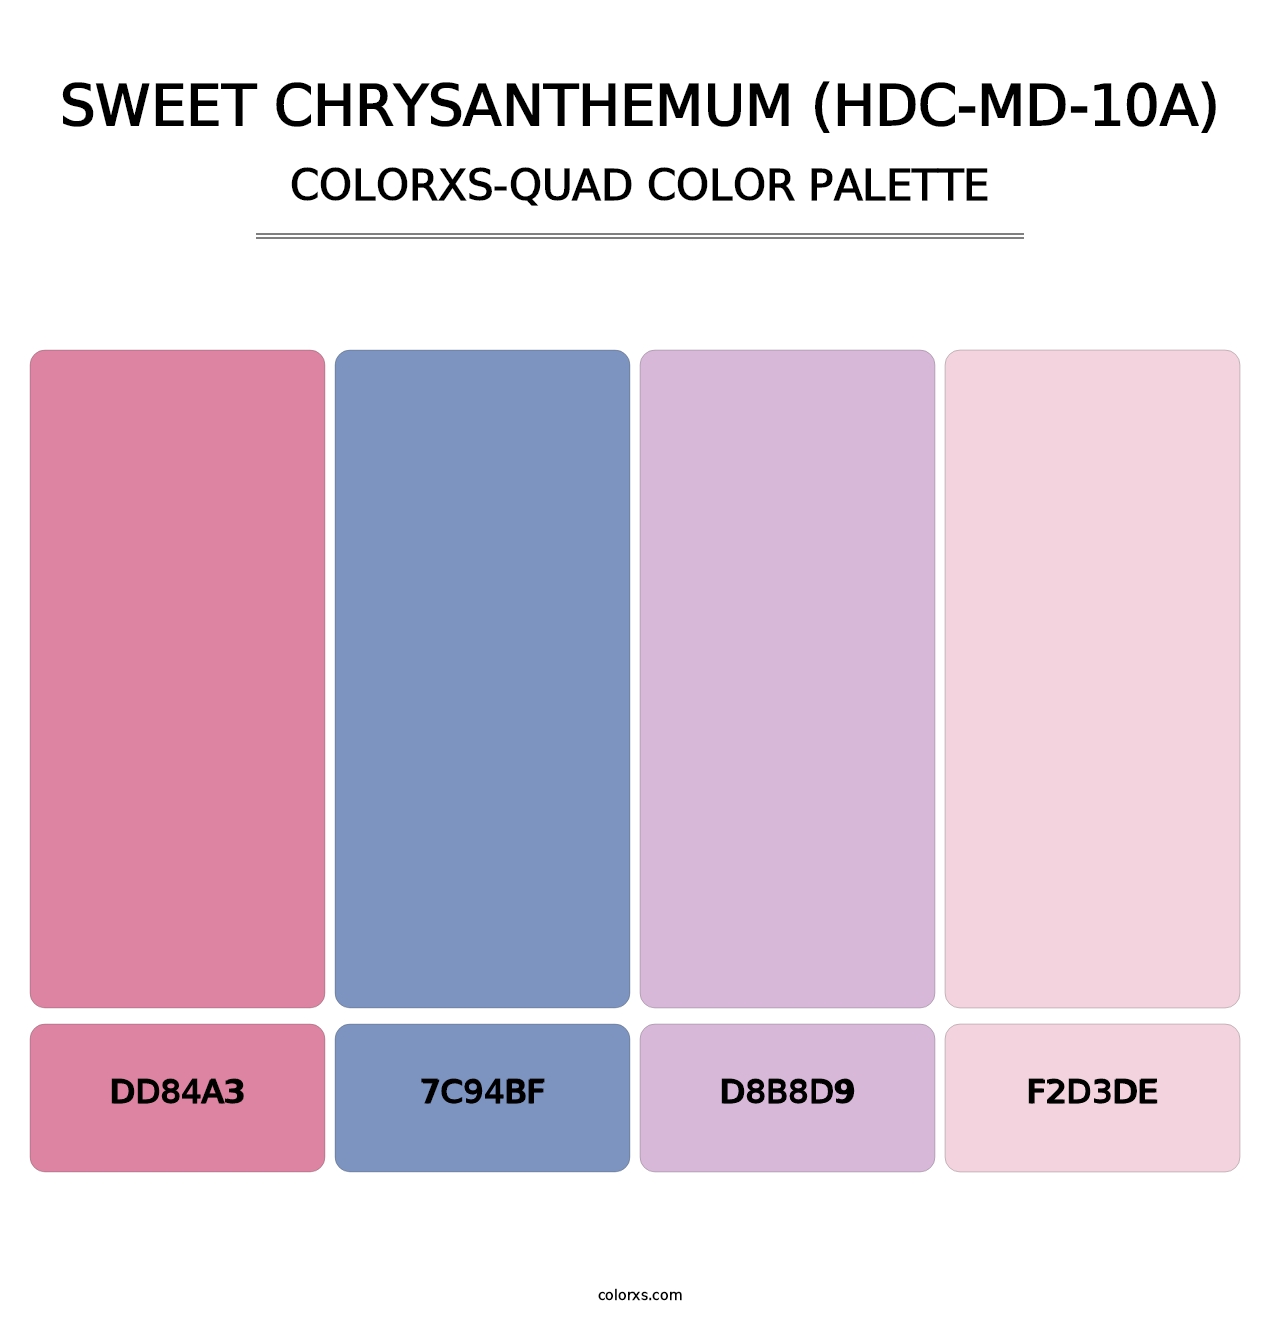 Sweet Chrysanthemum (HDC-MD-10A) - Colorxs Quad Palette